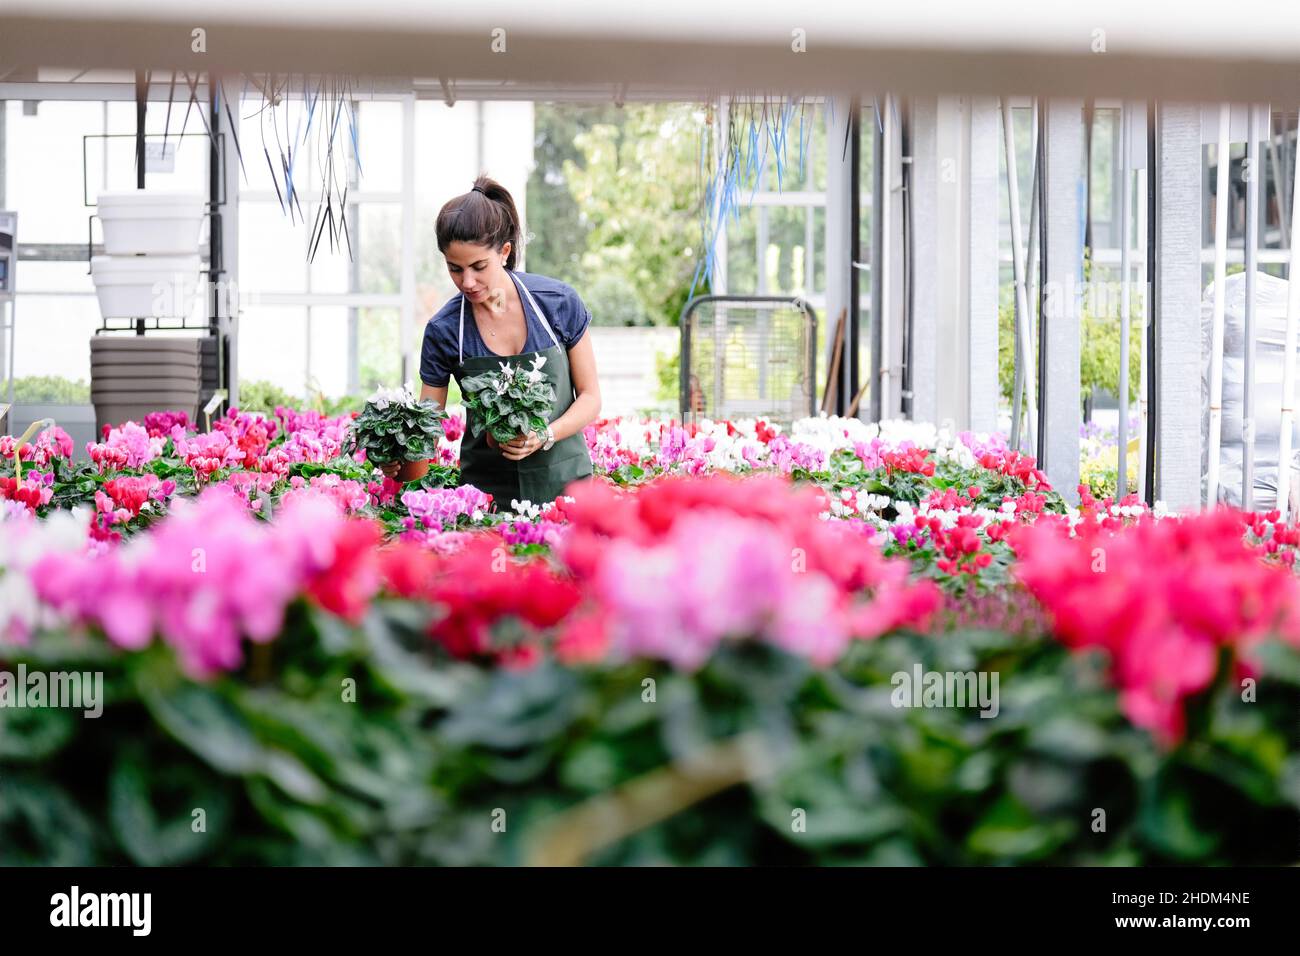 violet, greenhouse, garden center, gardener, violets, greenhouses, garden centers, gardeners Stock Photo